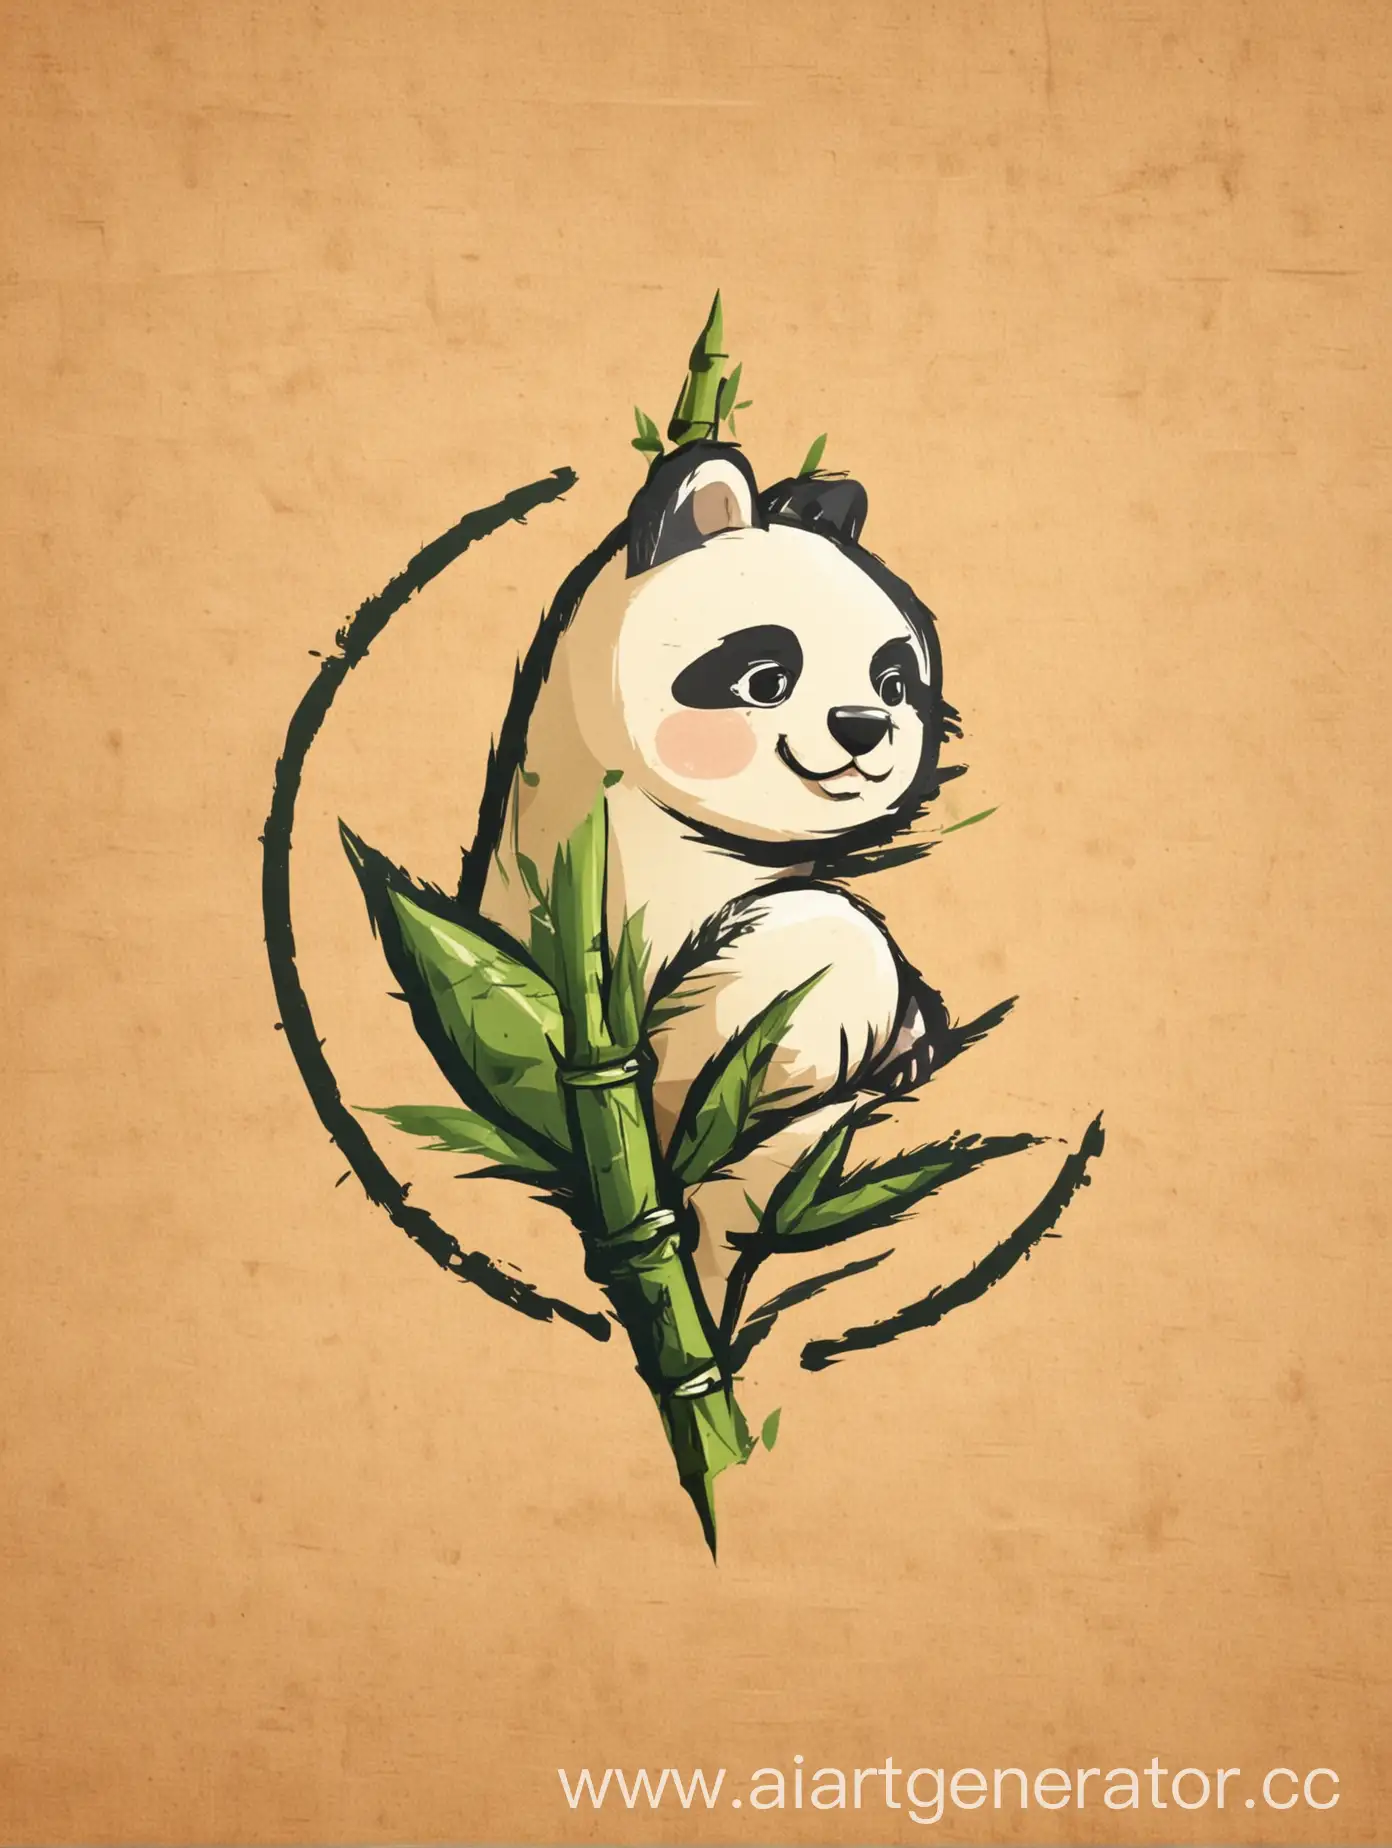 Bamboo-Growth-Symbolizing-SelfDevelopment